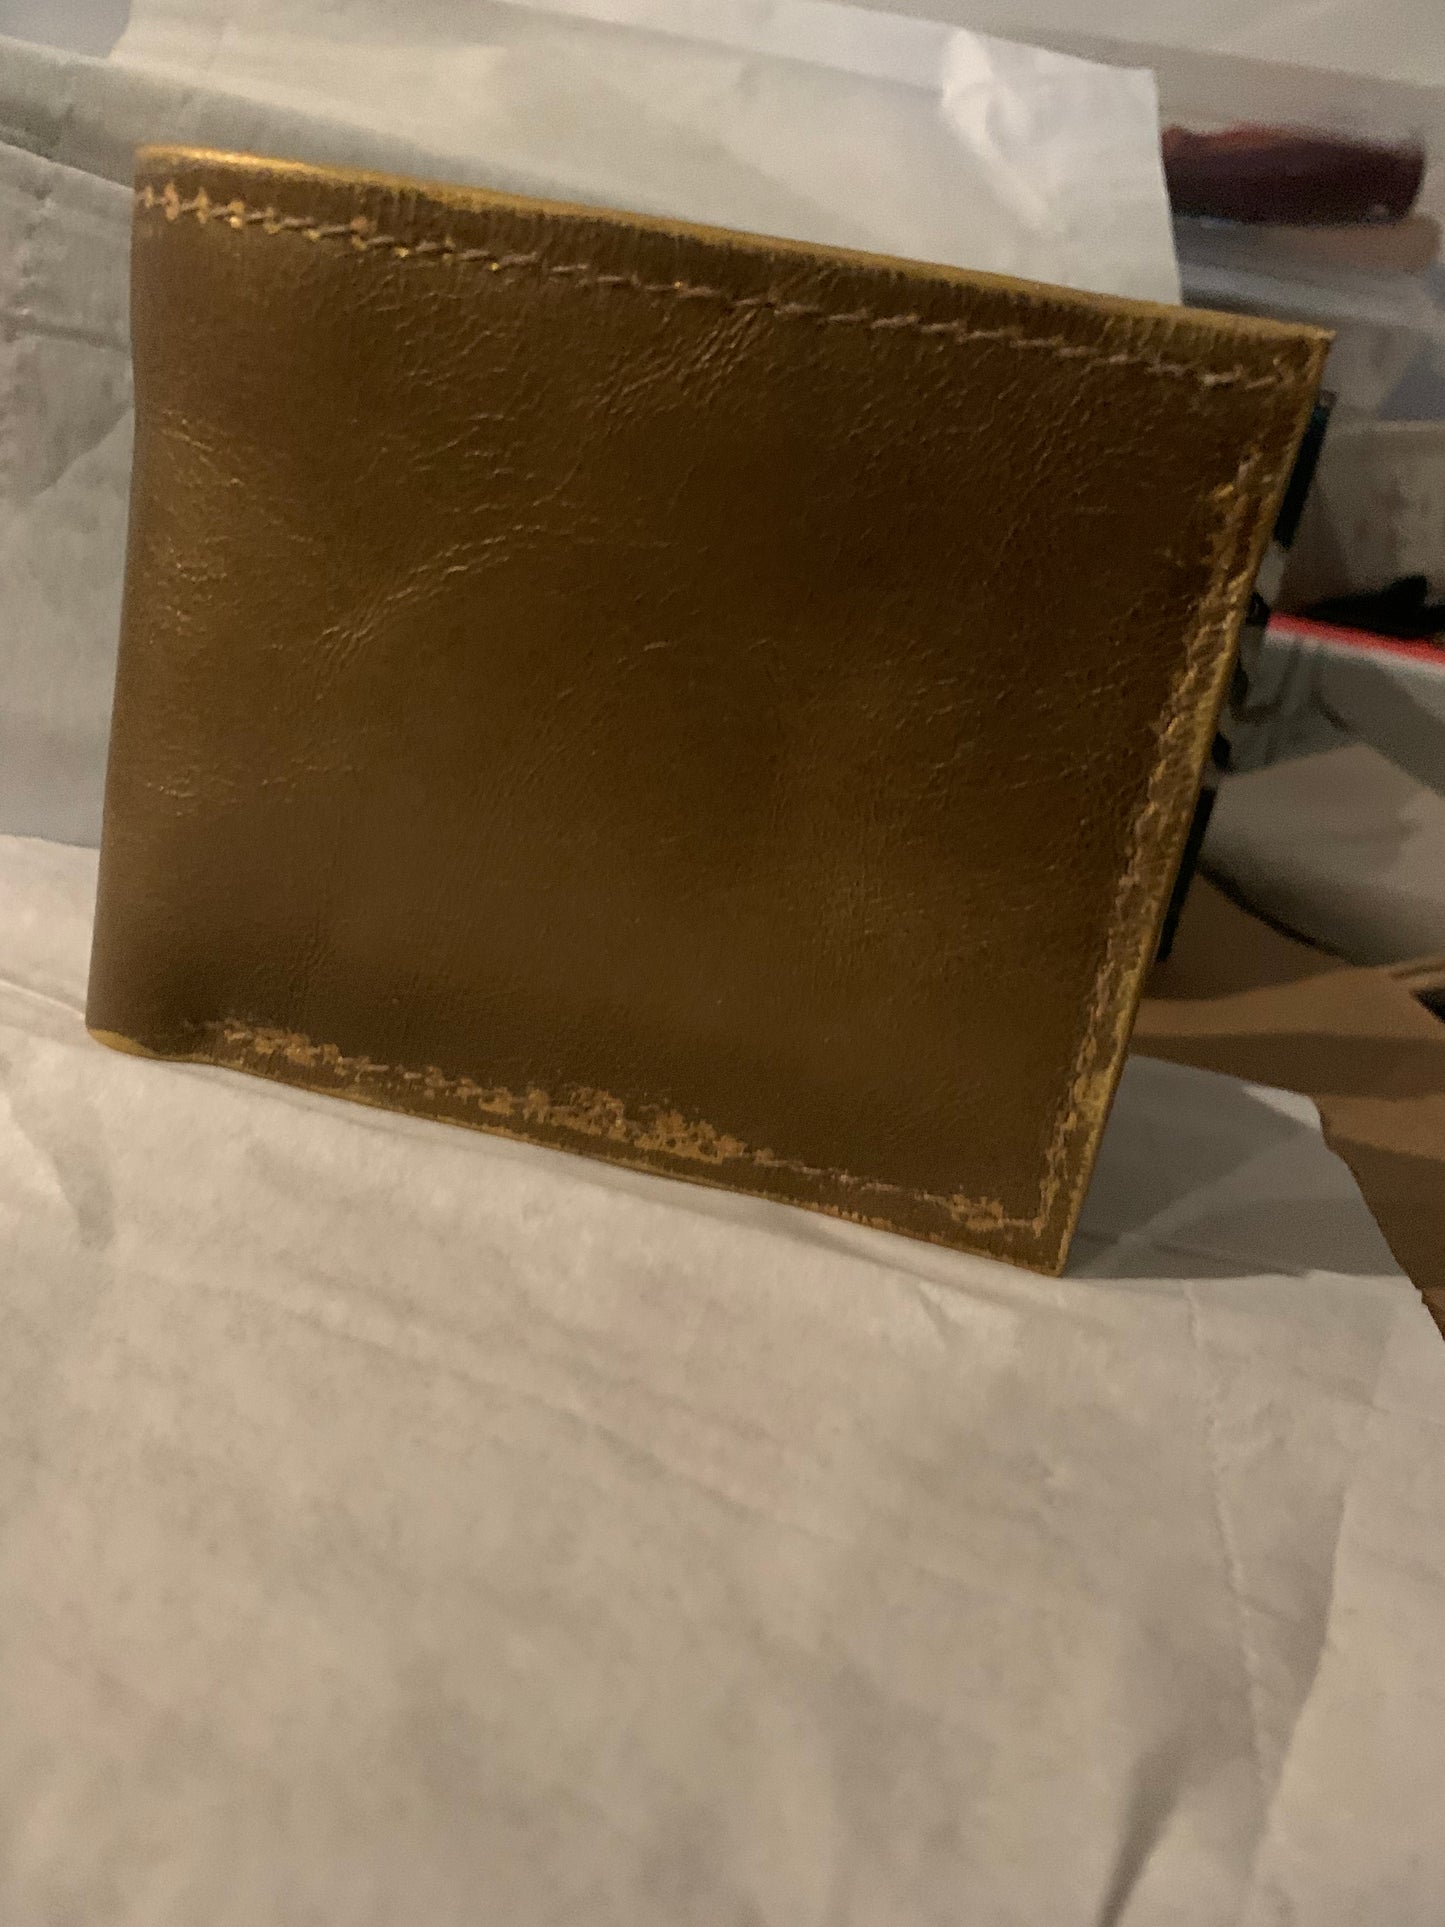 Metallic gold colour leather wallet